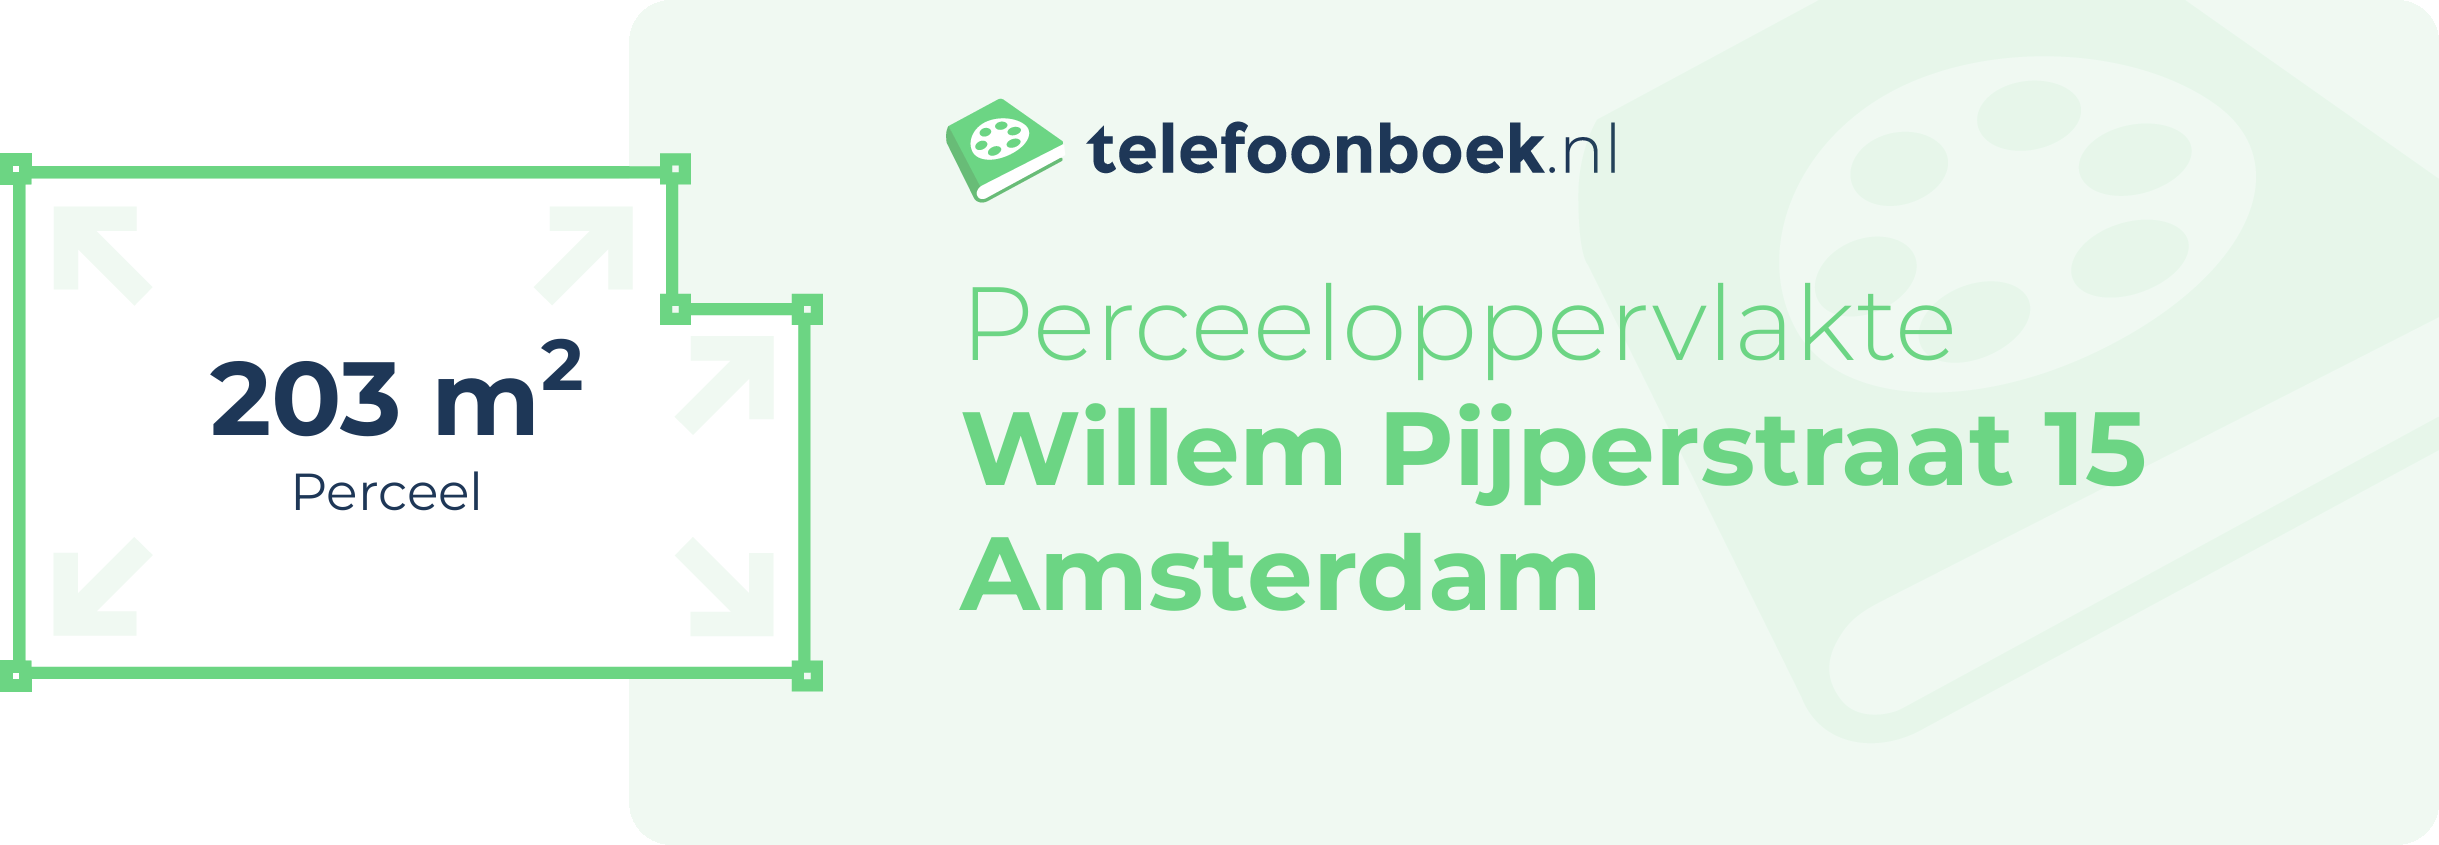 Perceeloppervlakte Willem Pijperstraat 15 Amsterdam